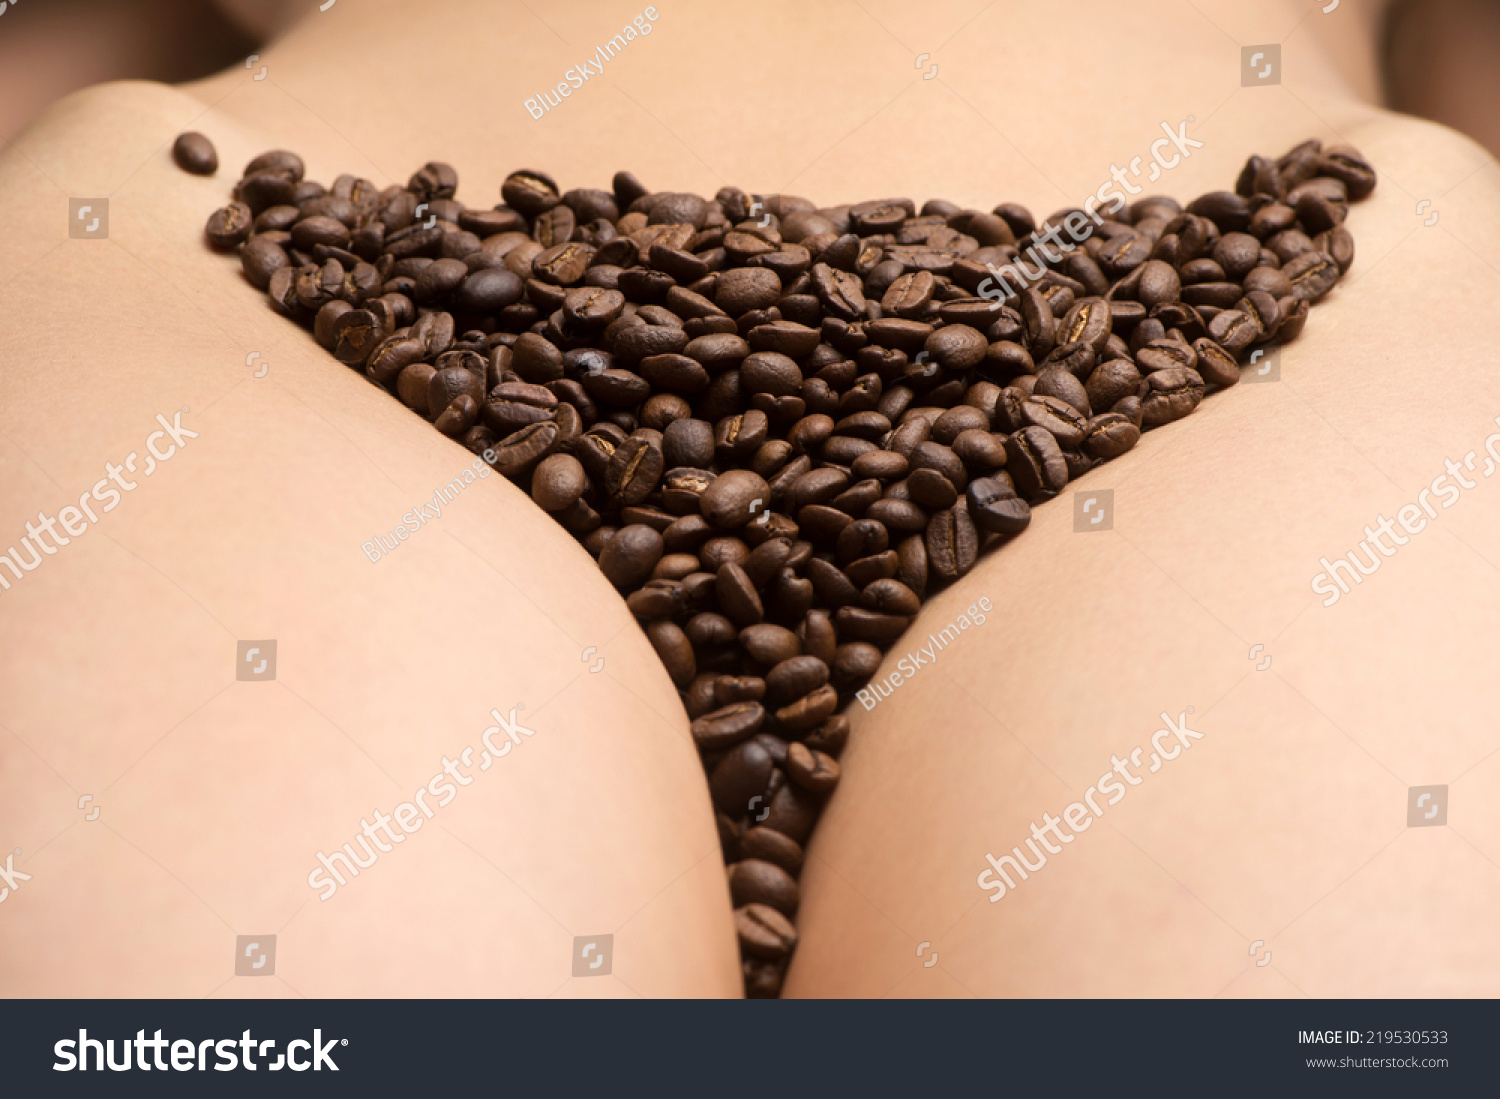 Beans - nude photos